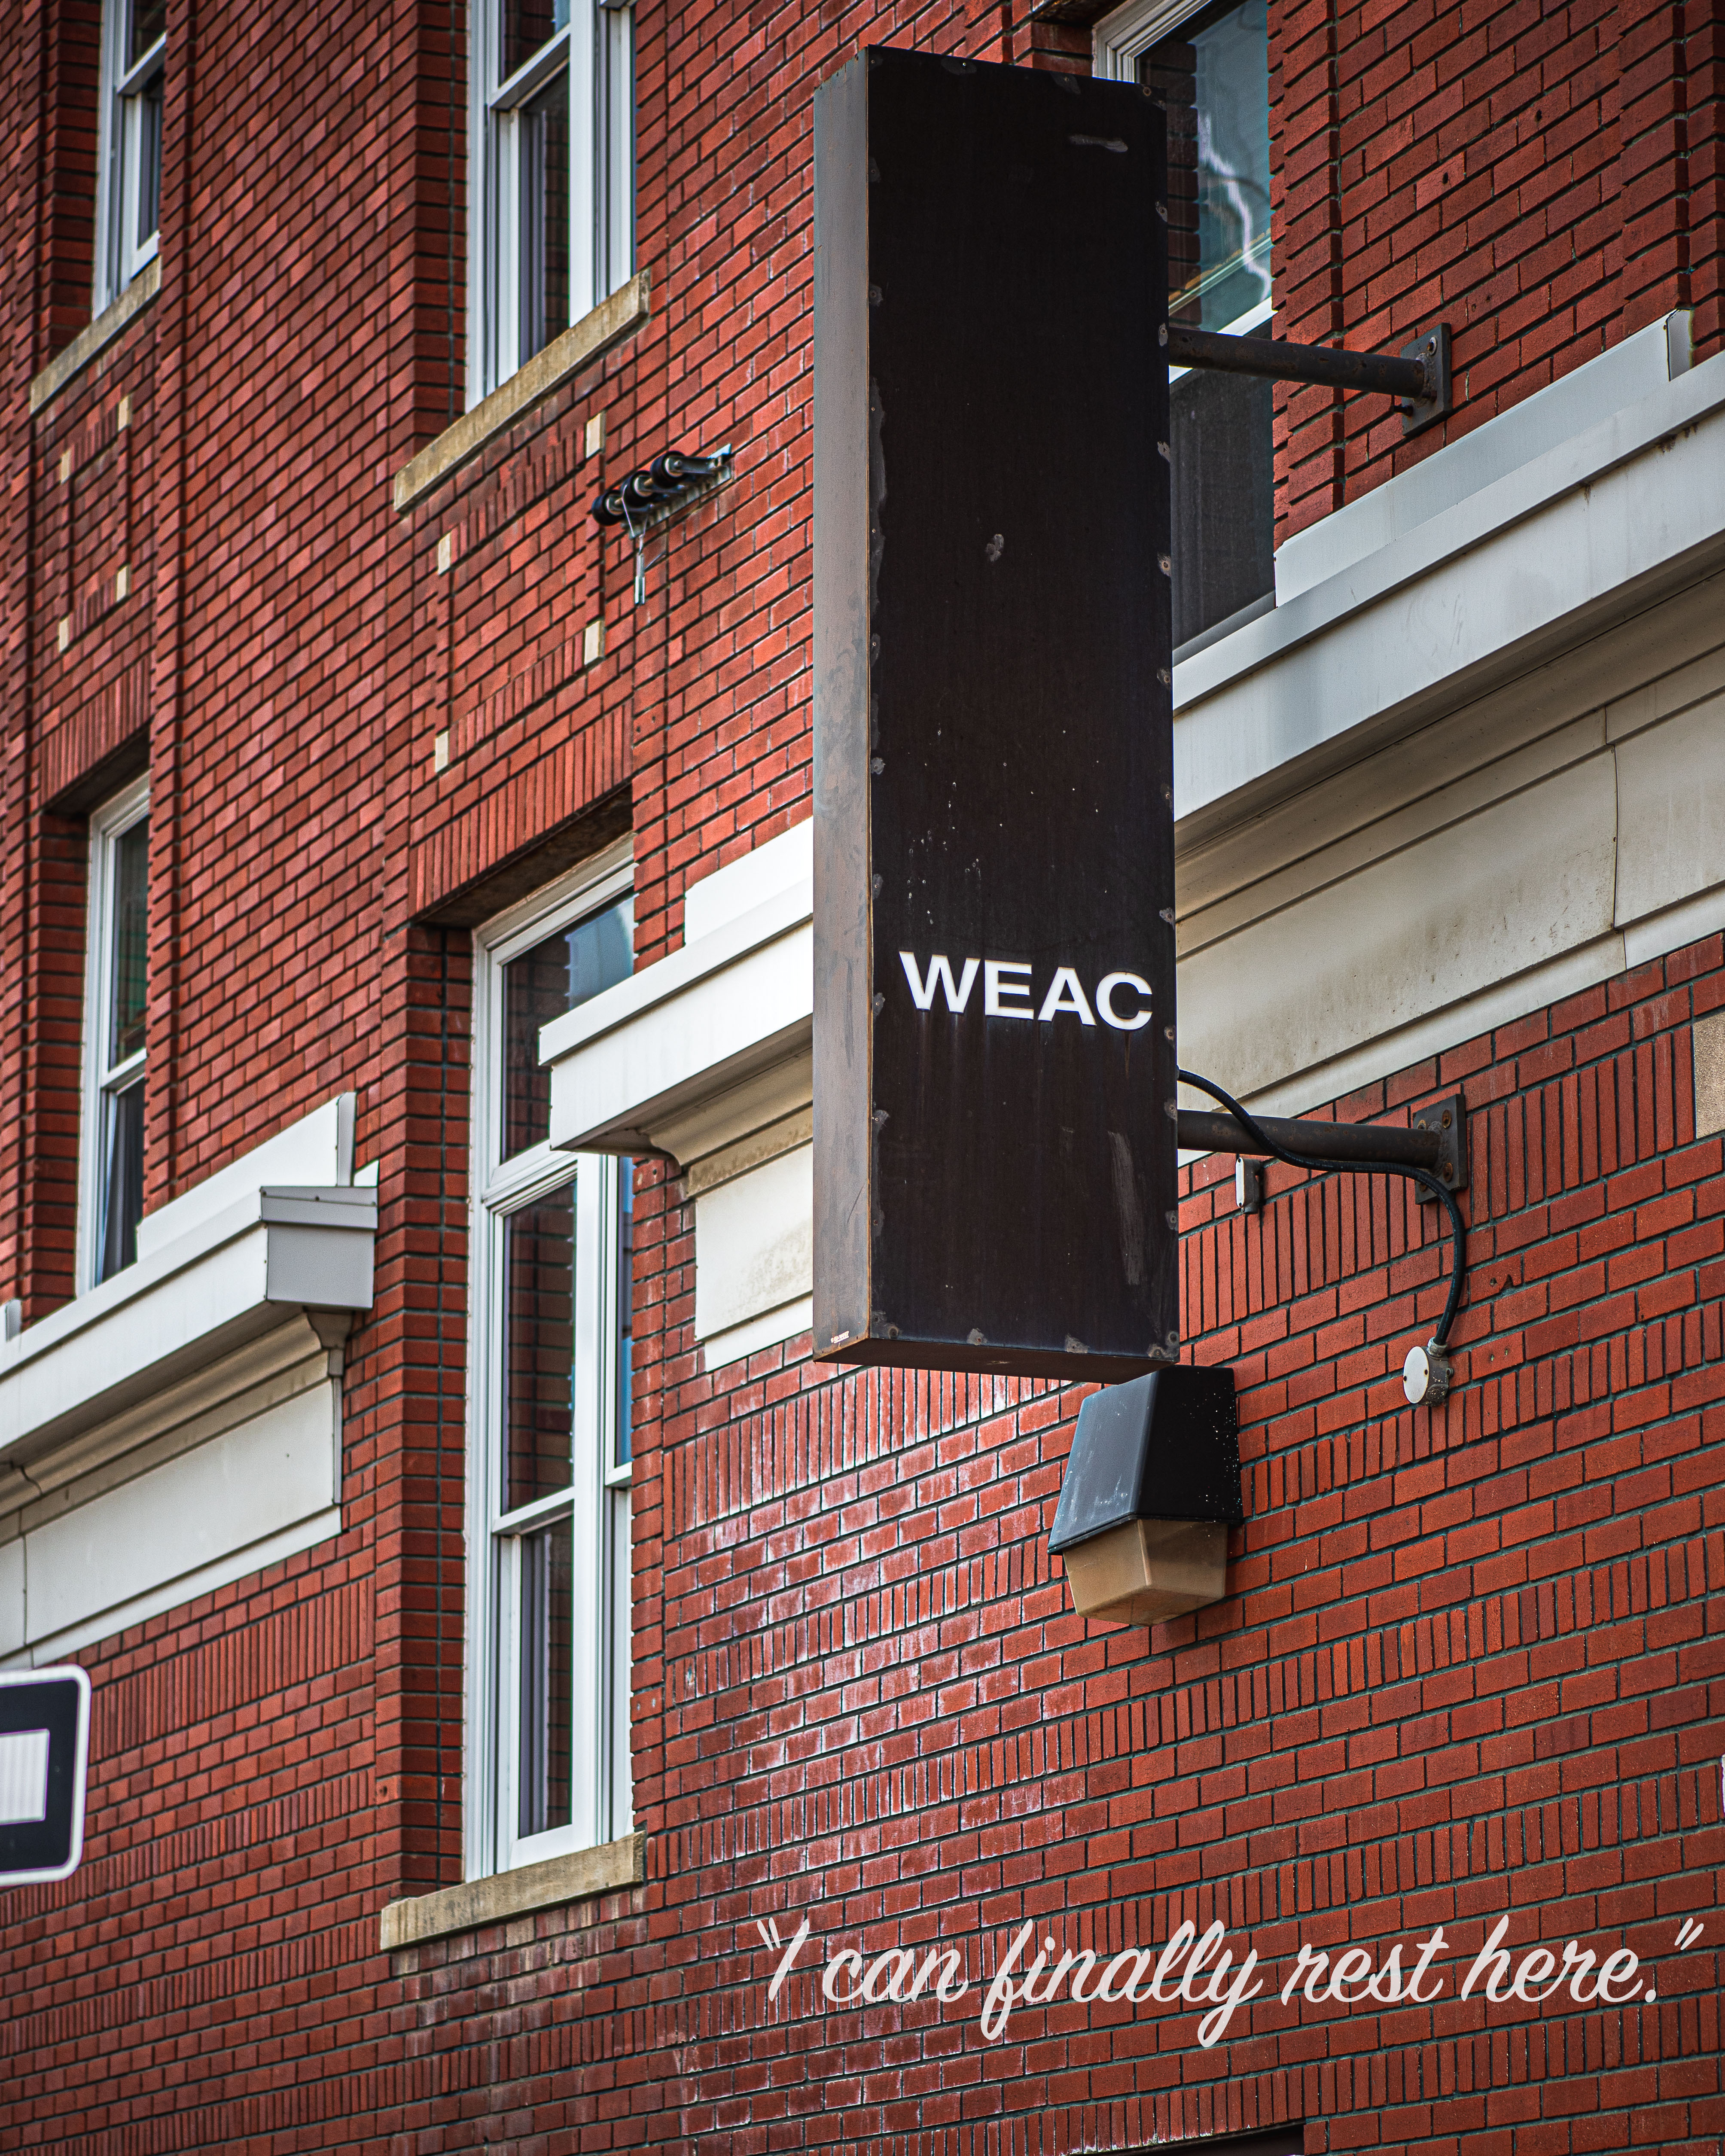 WEAC signage